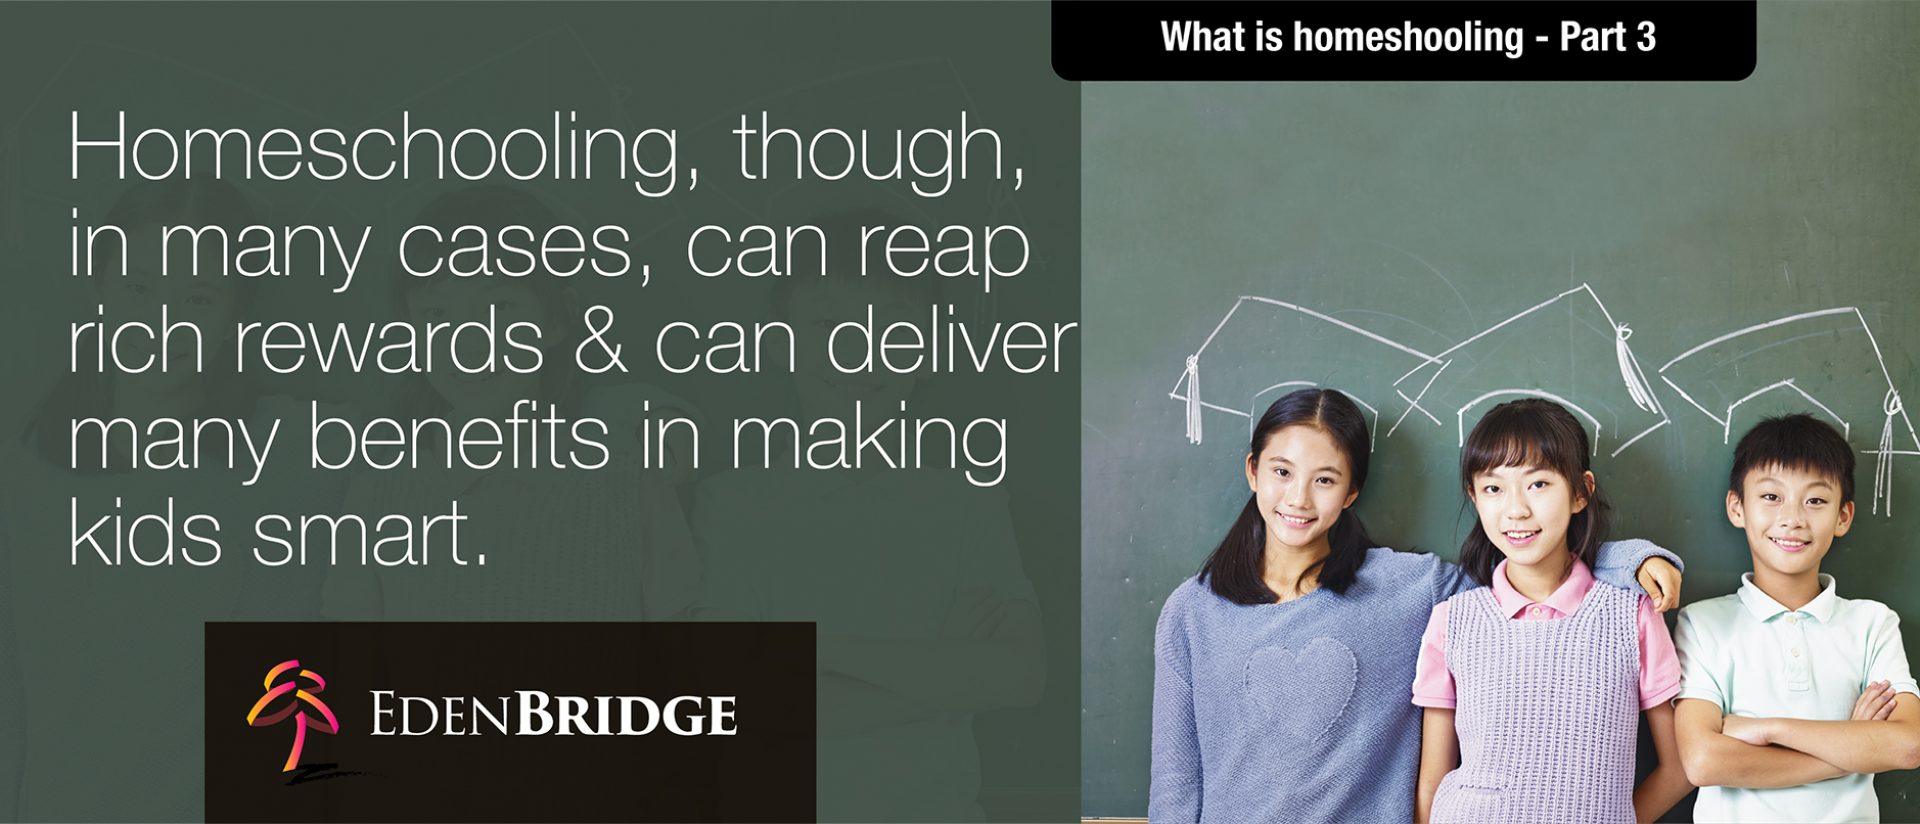 edenbridge-homeschooling-malaysia-c-slide-2a